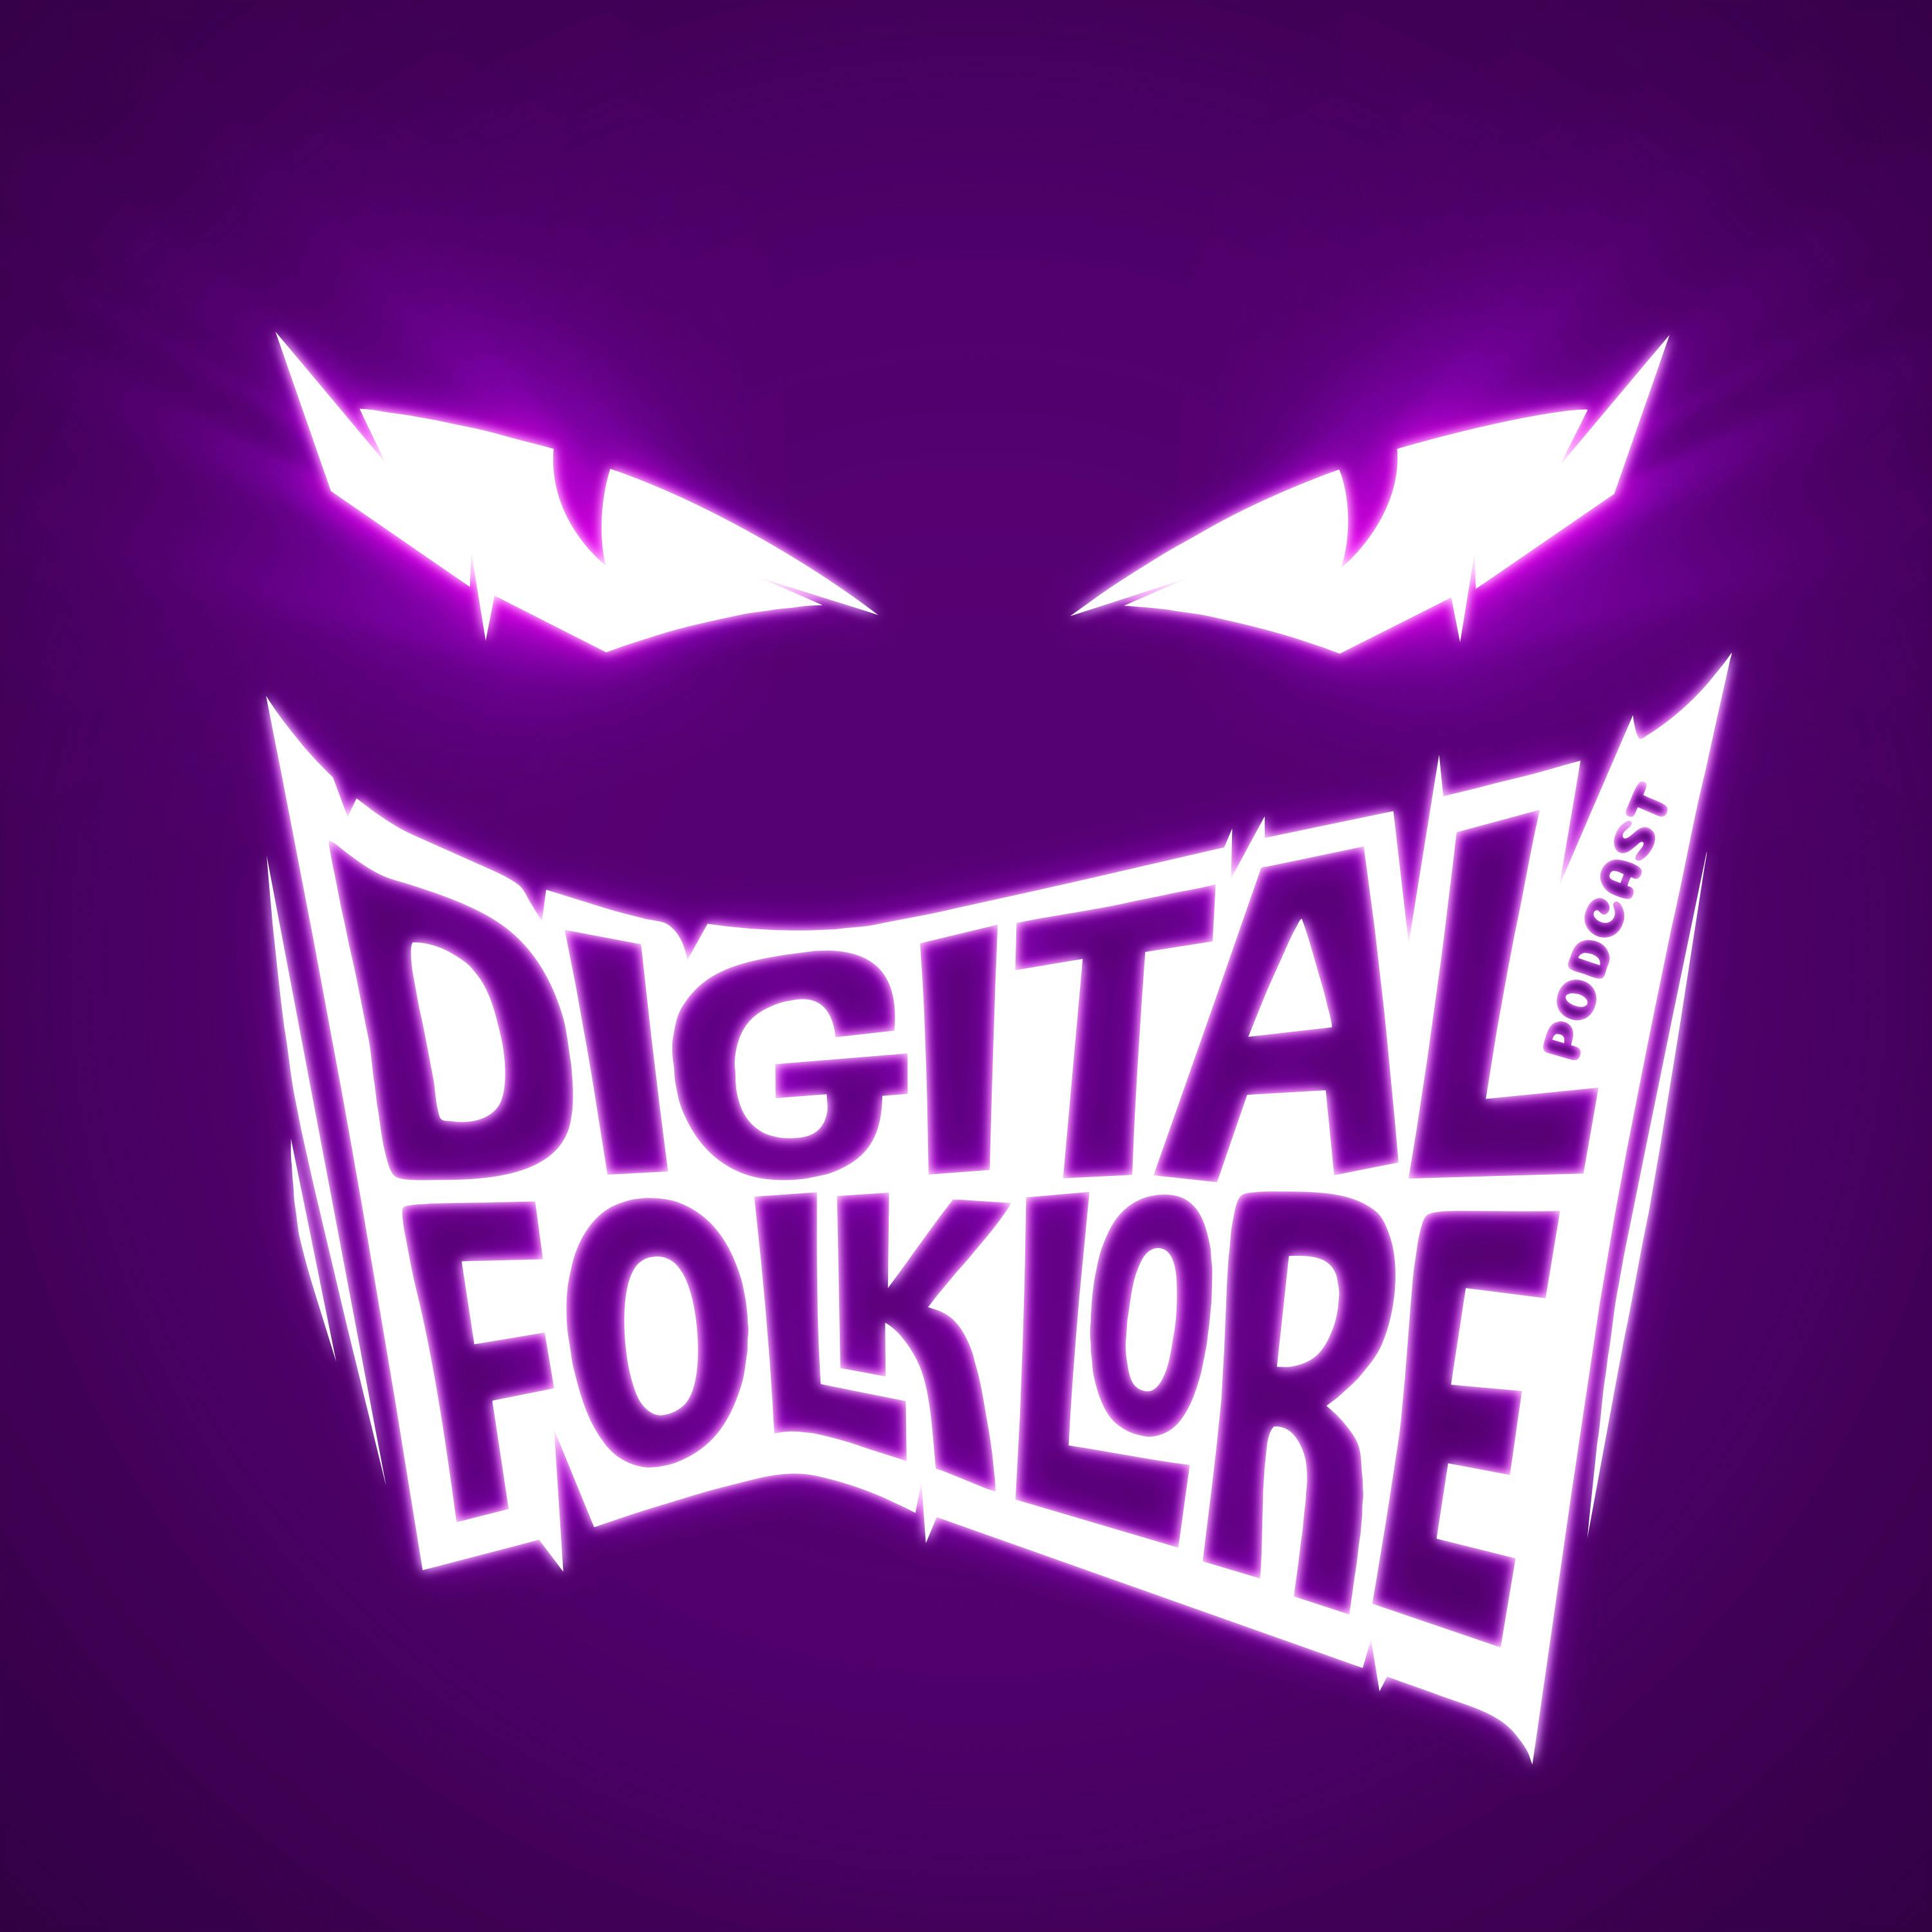 Digital Folklore podcast show image